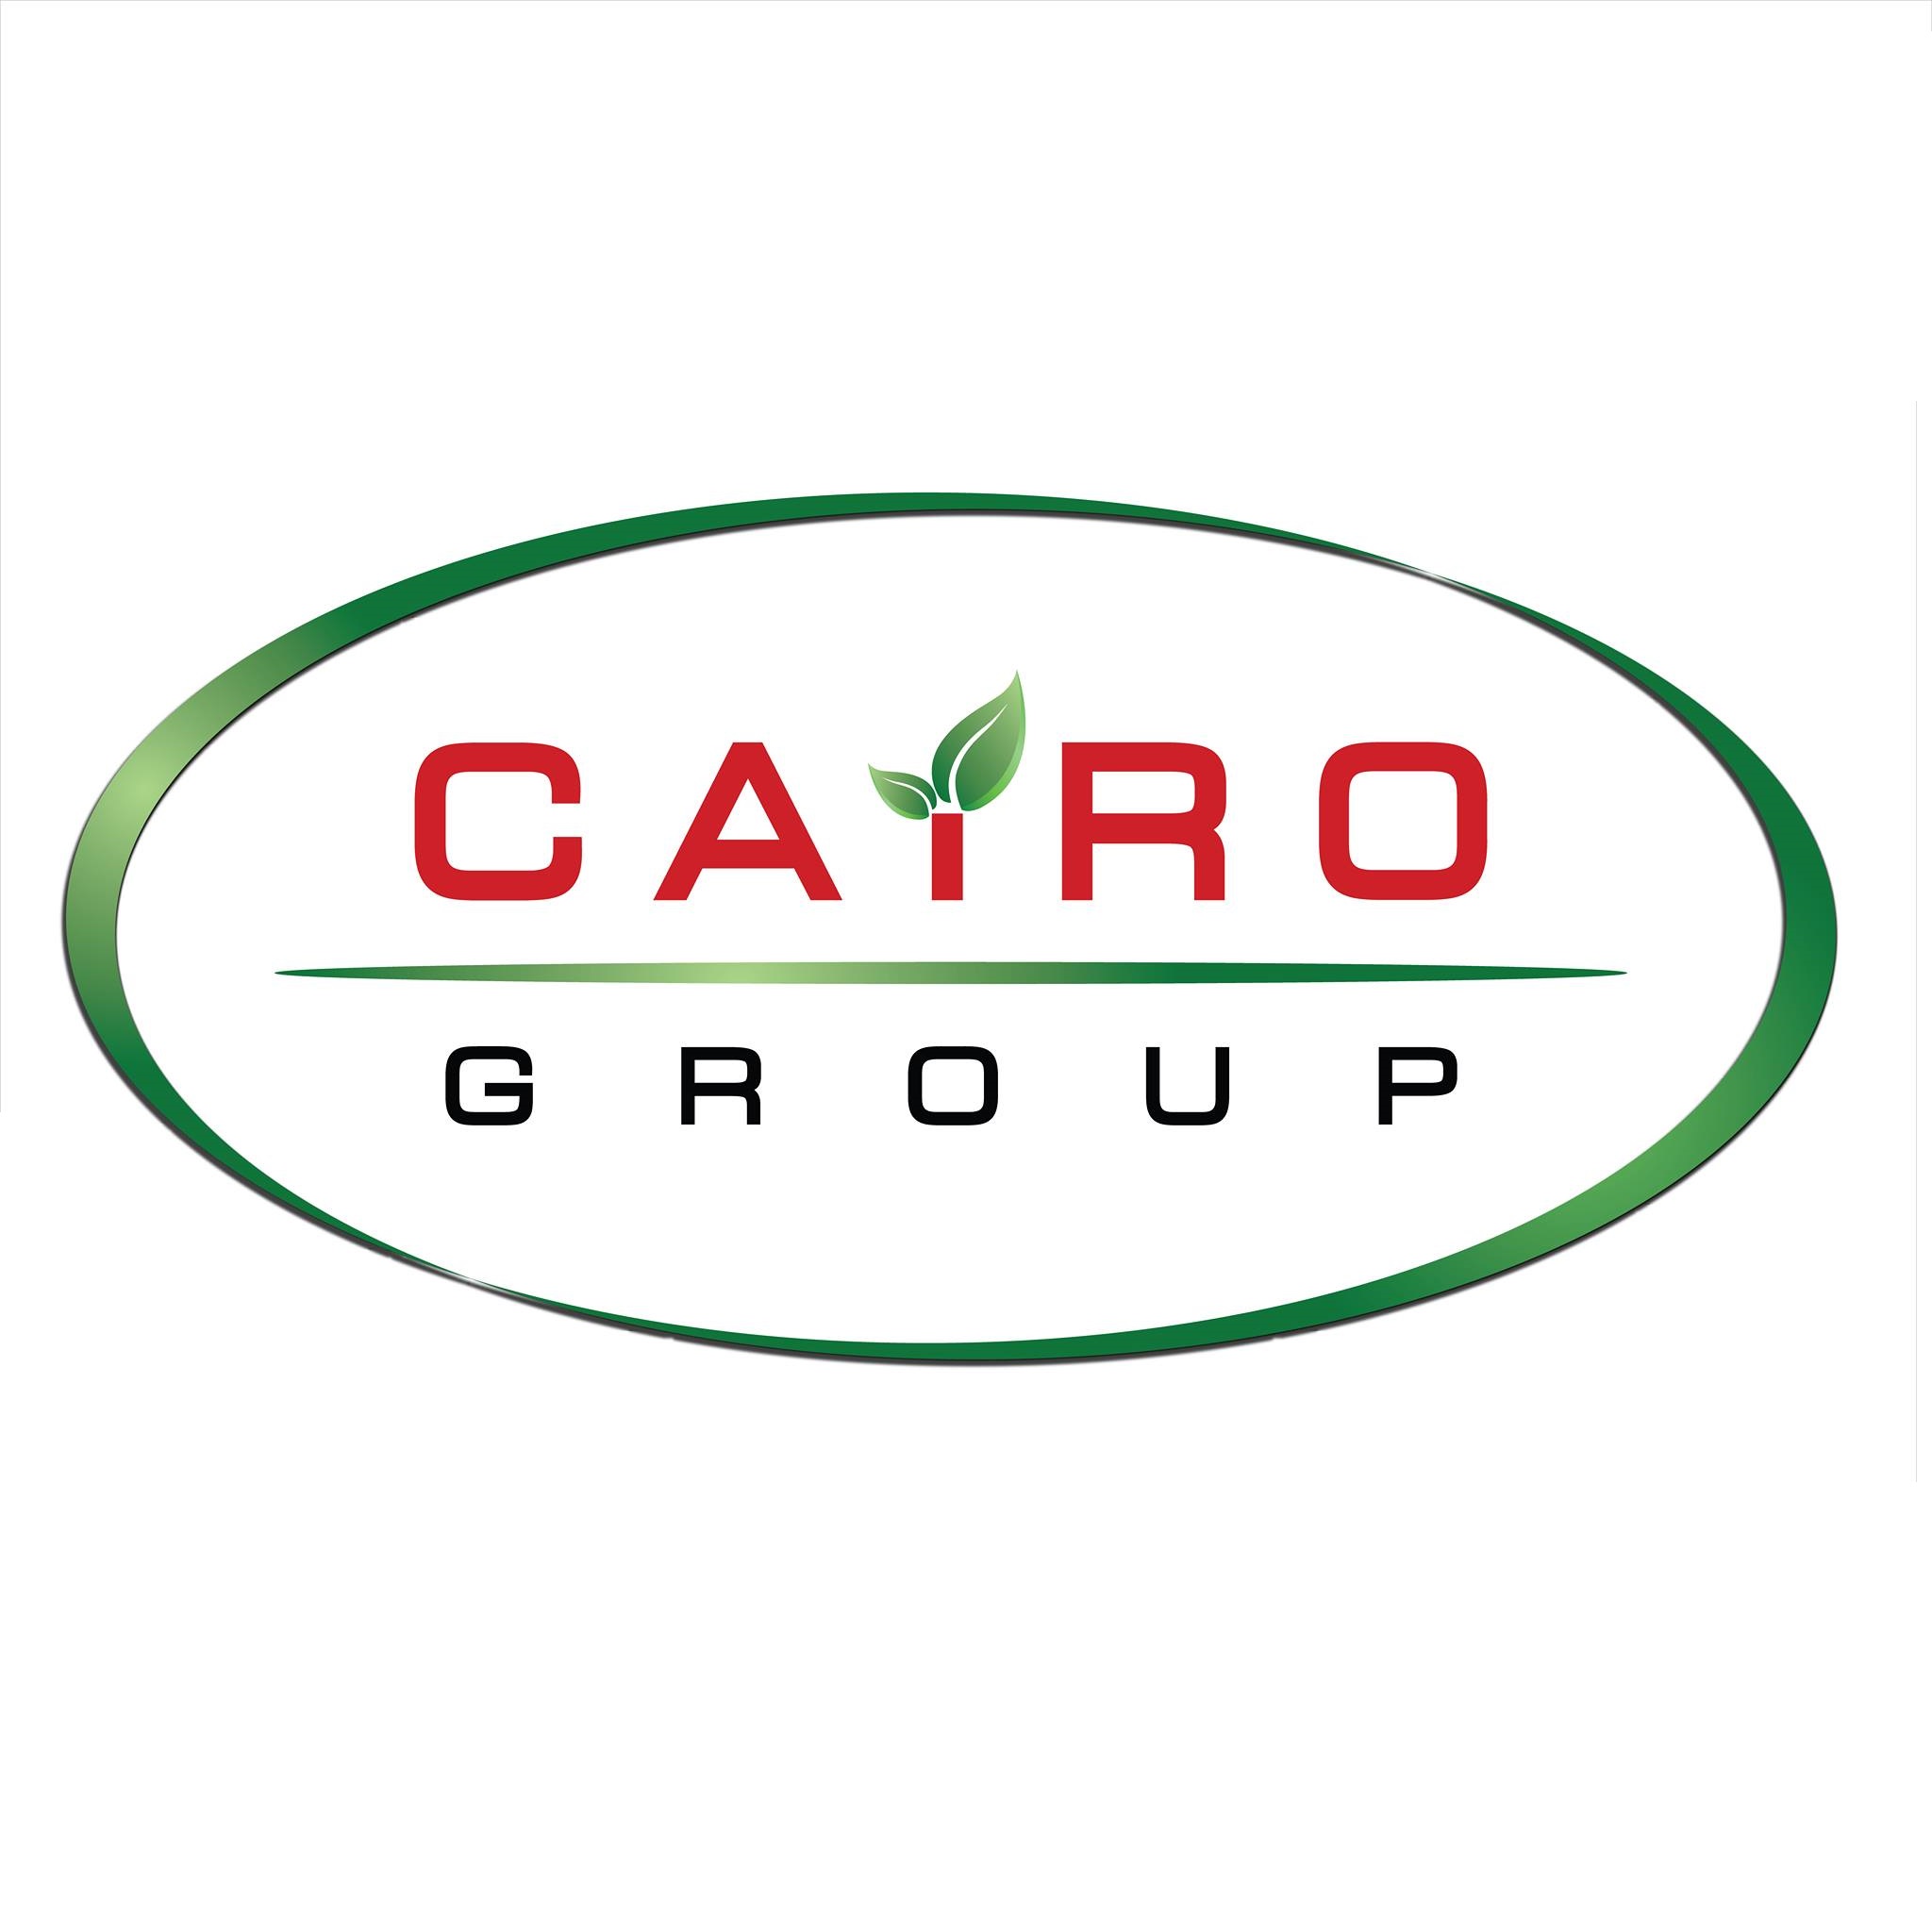 Cairo Group